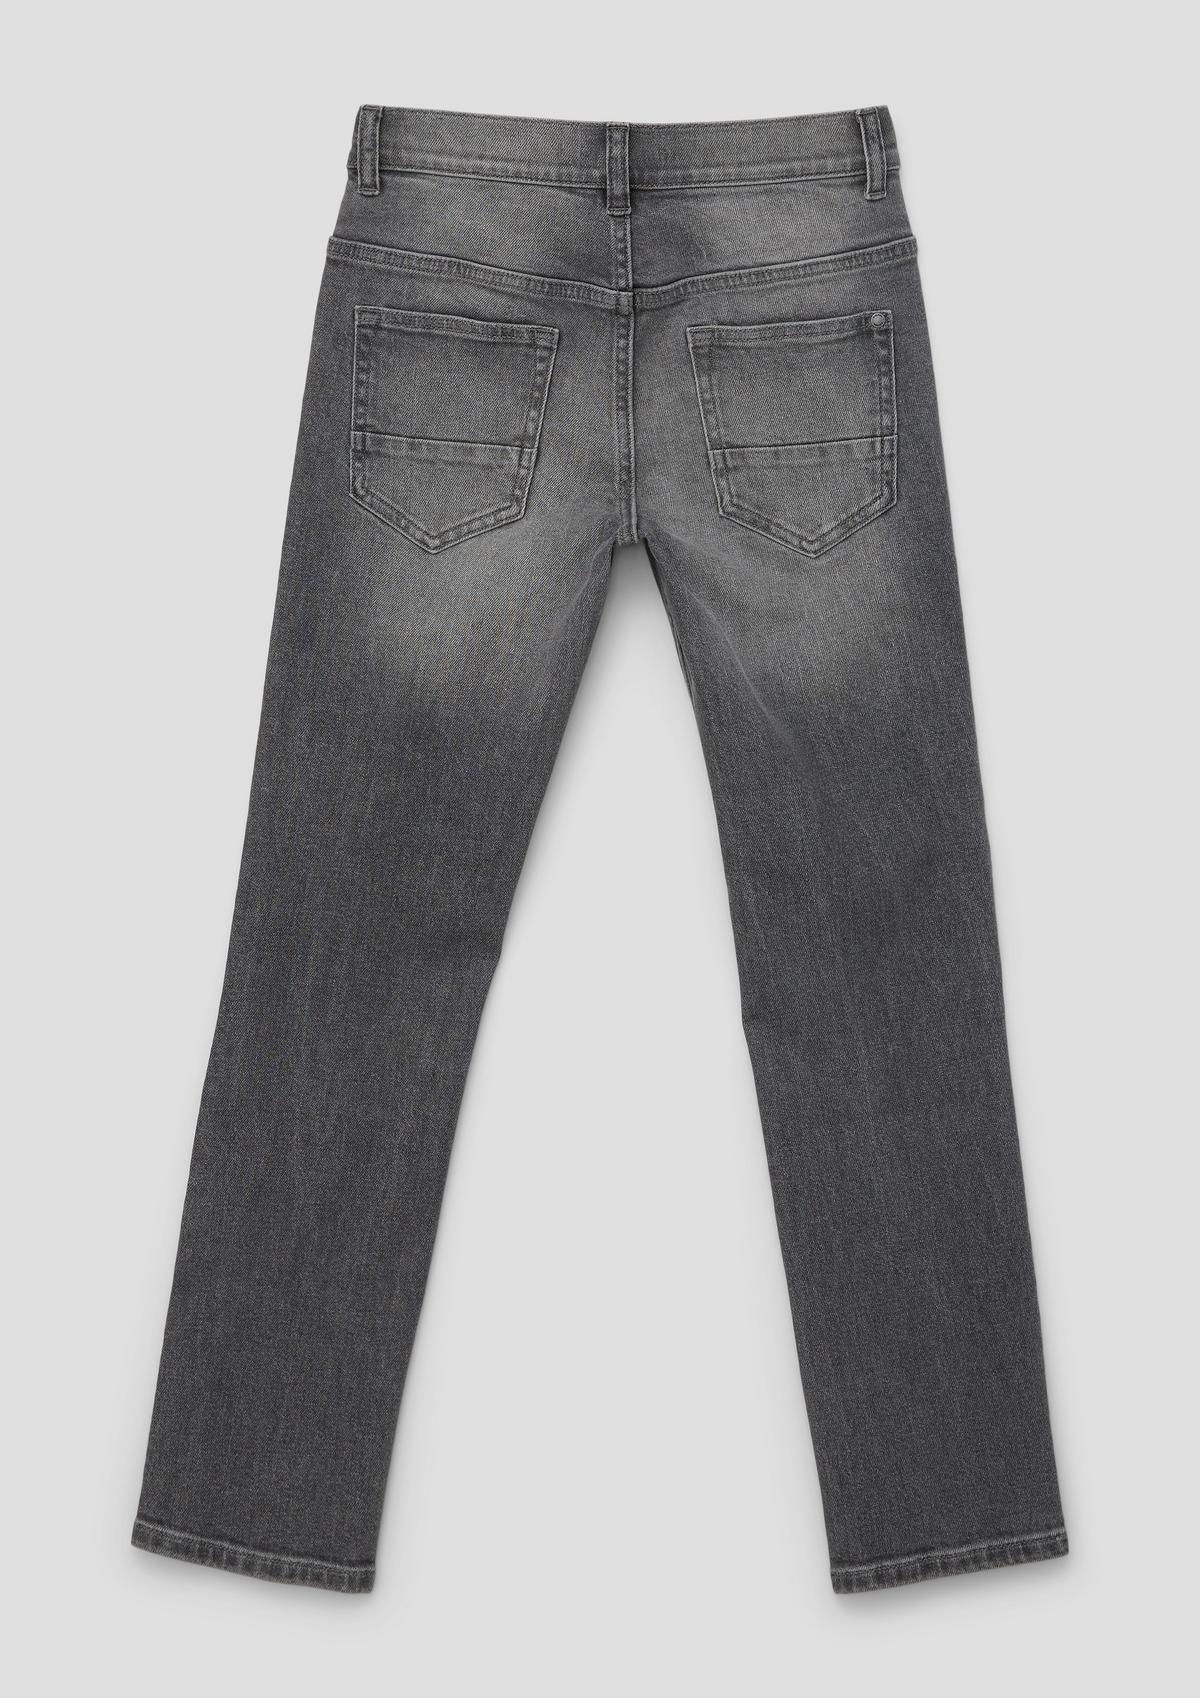 s.Oliver Jeans Seattle / regular fit / mid rise / slim leg